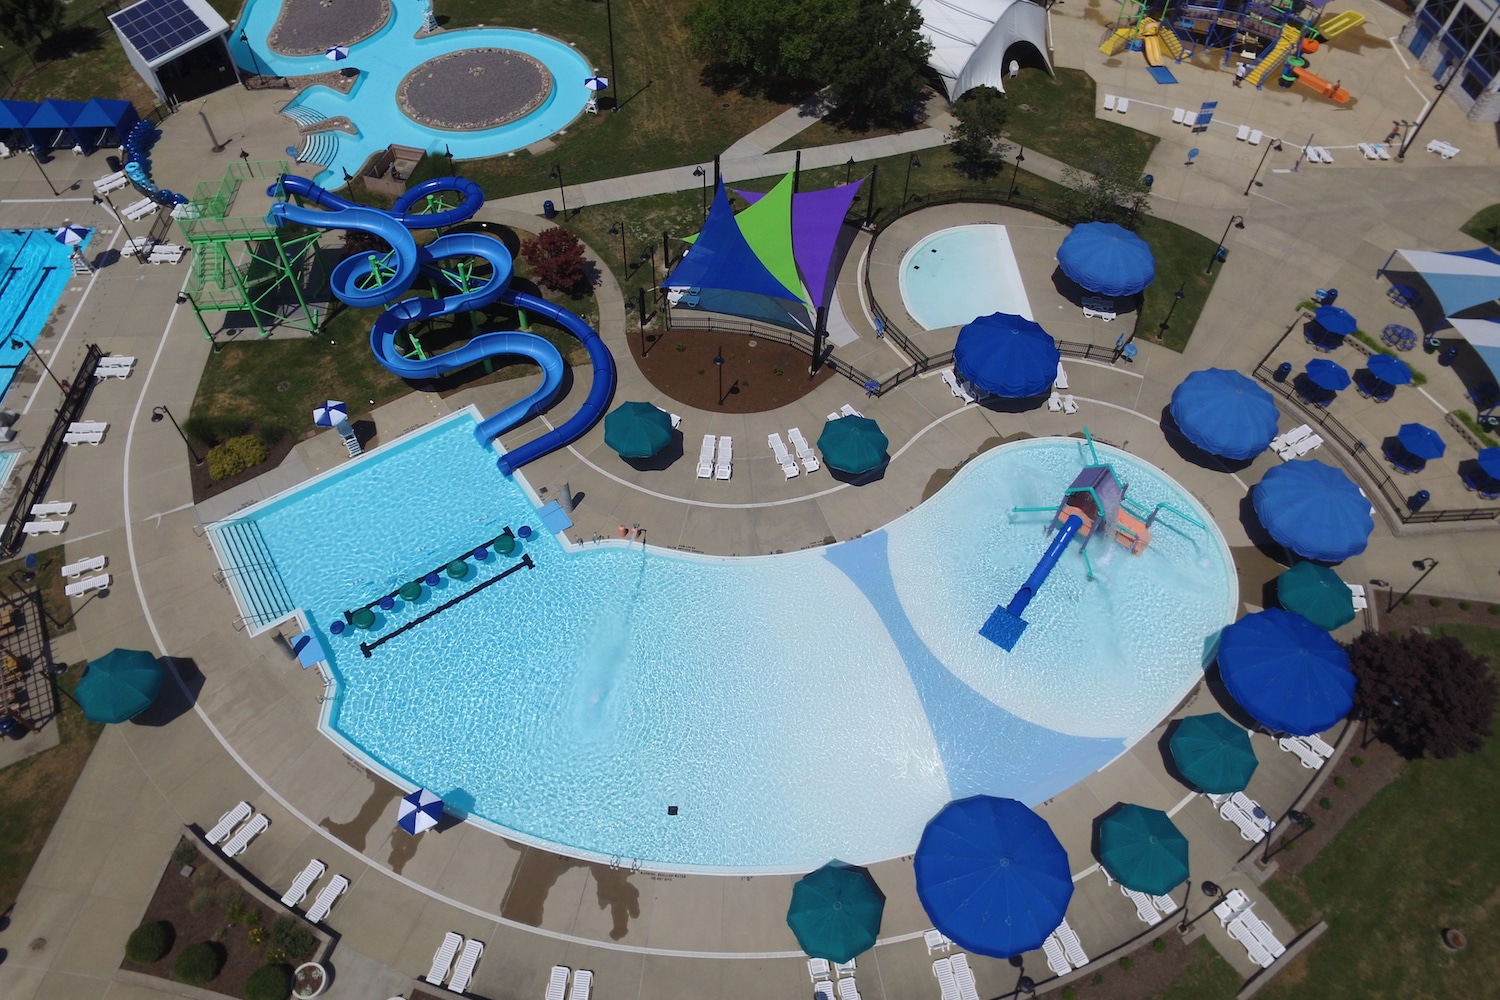 Collinsville Aqua Park pools and shade